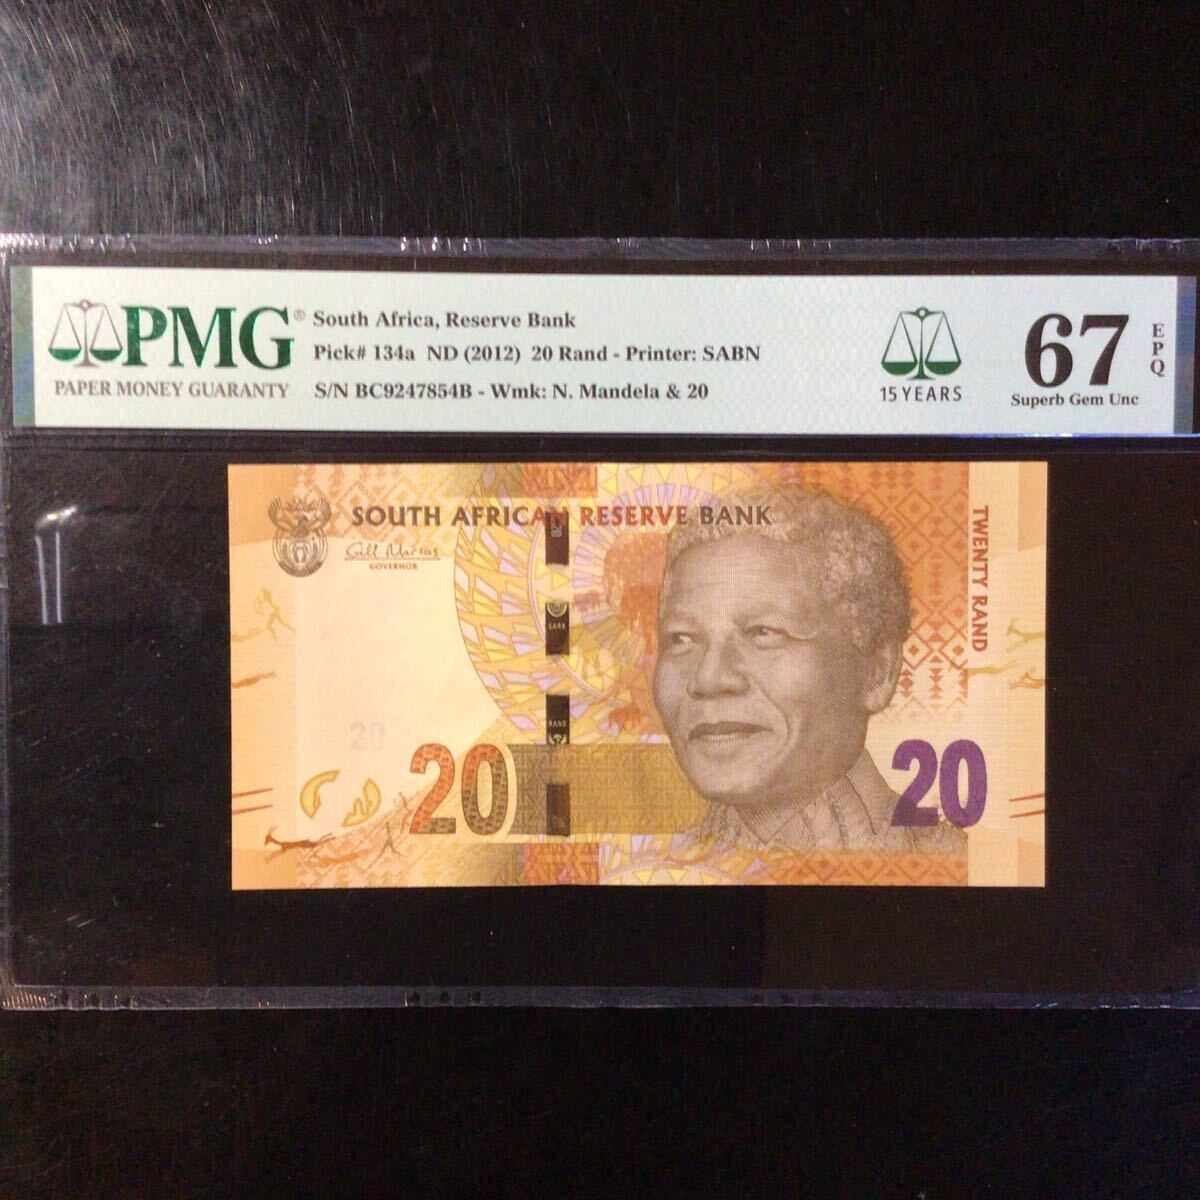 World Banknote Grading SOUTH AFRICA《Reserve Bank》20 Rand【2012】『PMG Grading Superb Gem Uncirculated 67 EPQ』_画像1